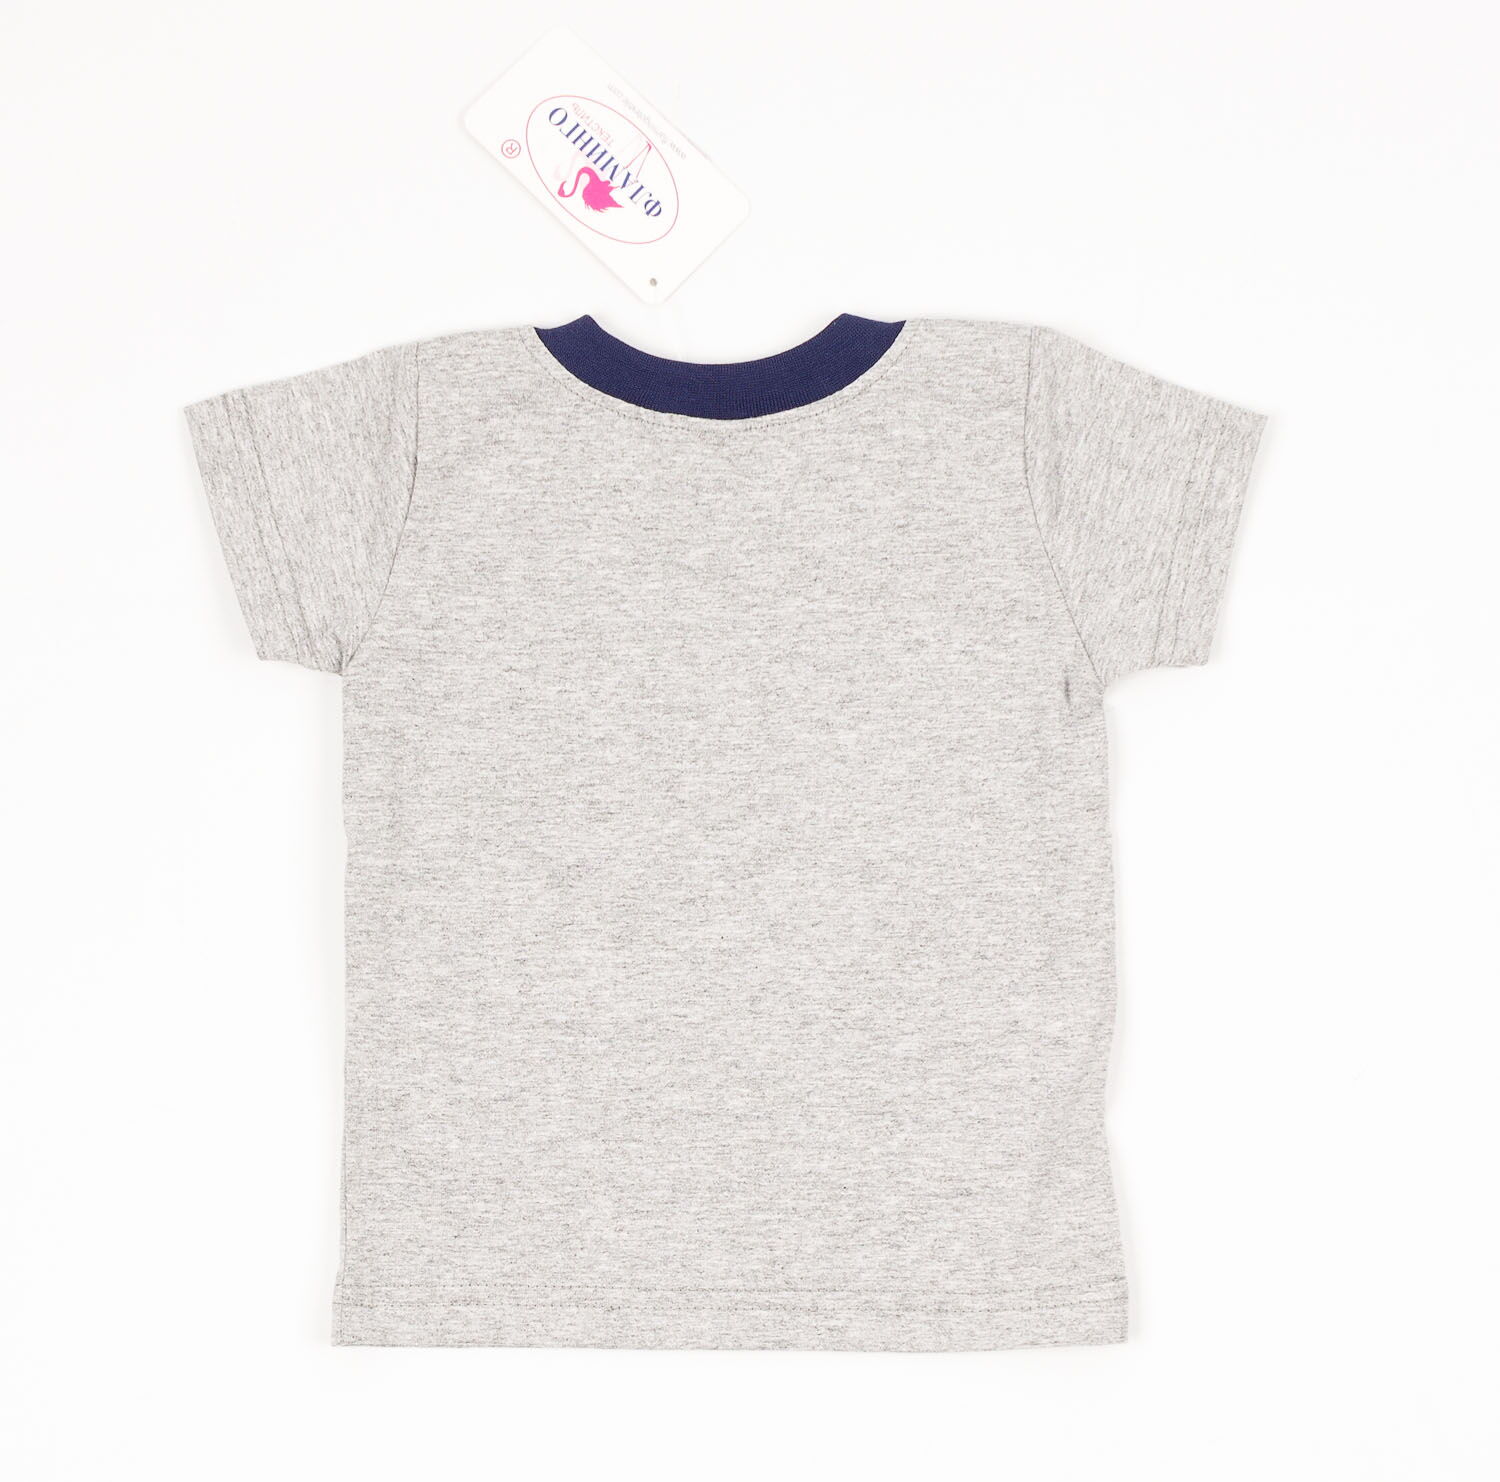 Комплект для мальчика (футболка+шорты) Фламинго серый 688-110 - картинка